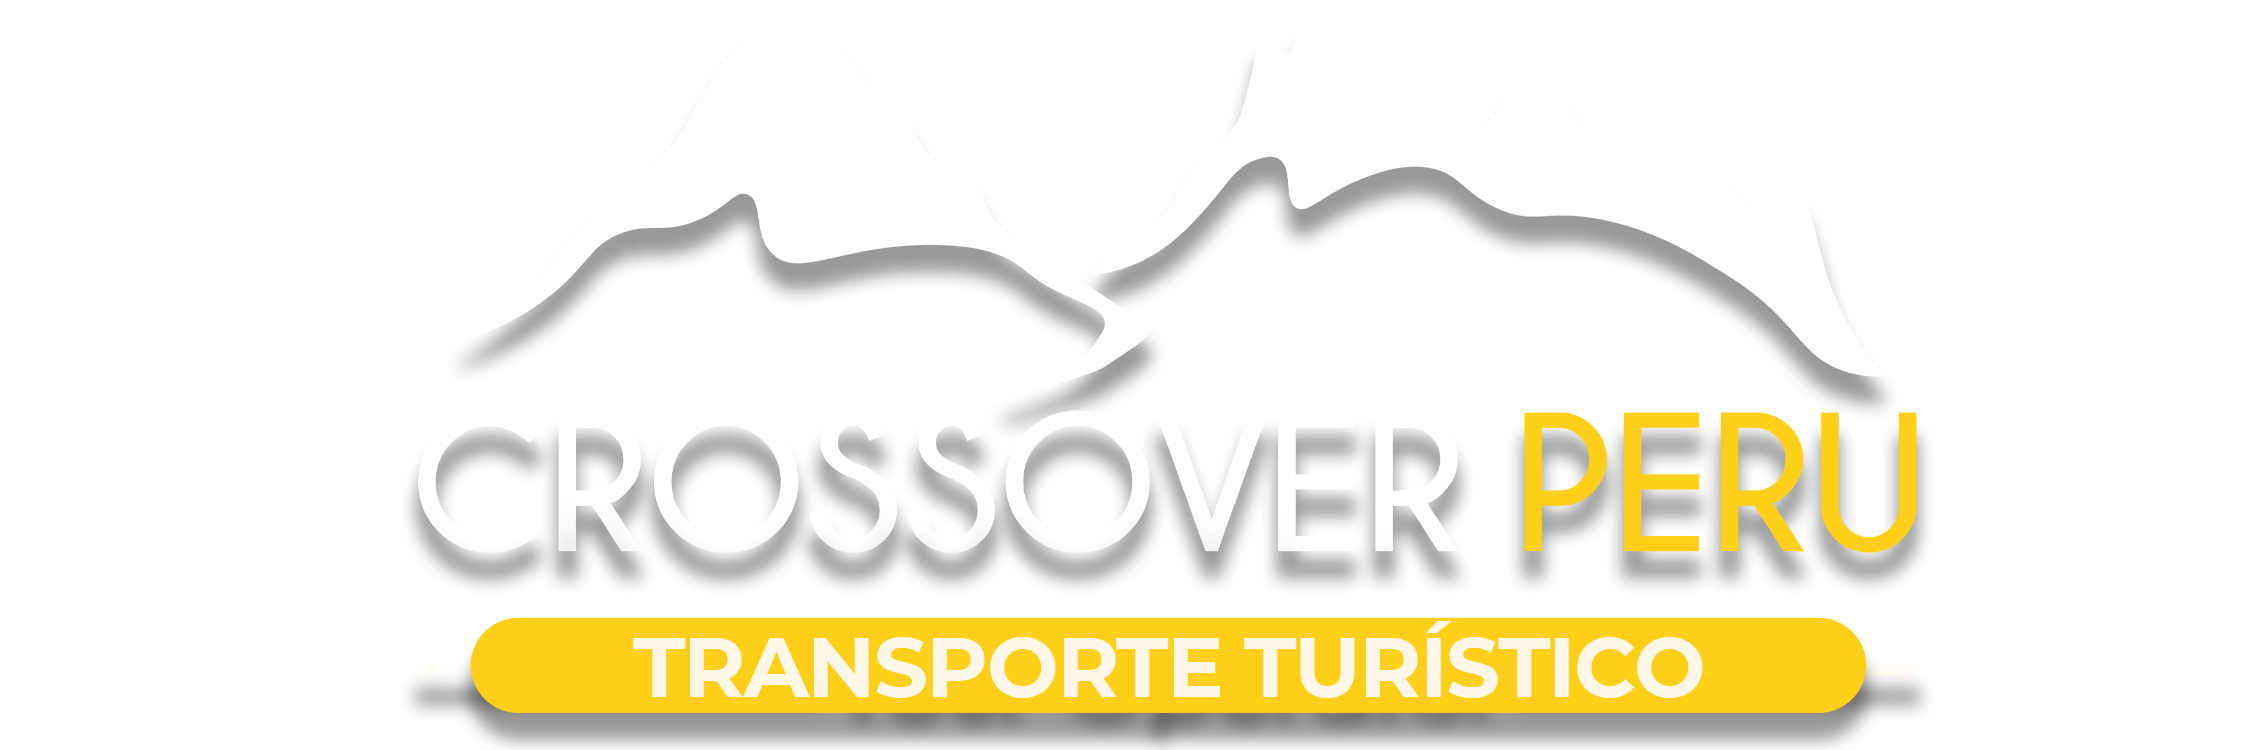 Transporte Turistico CrossoverPeru